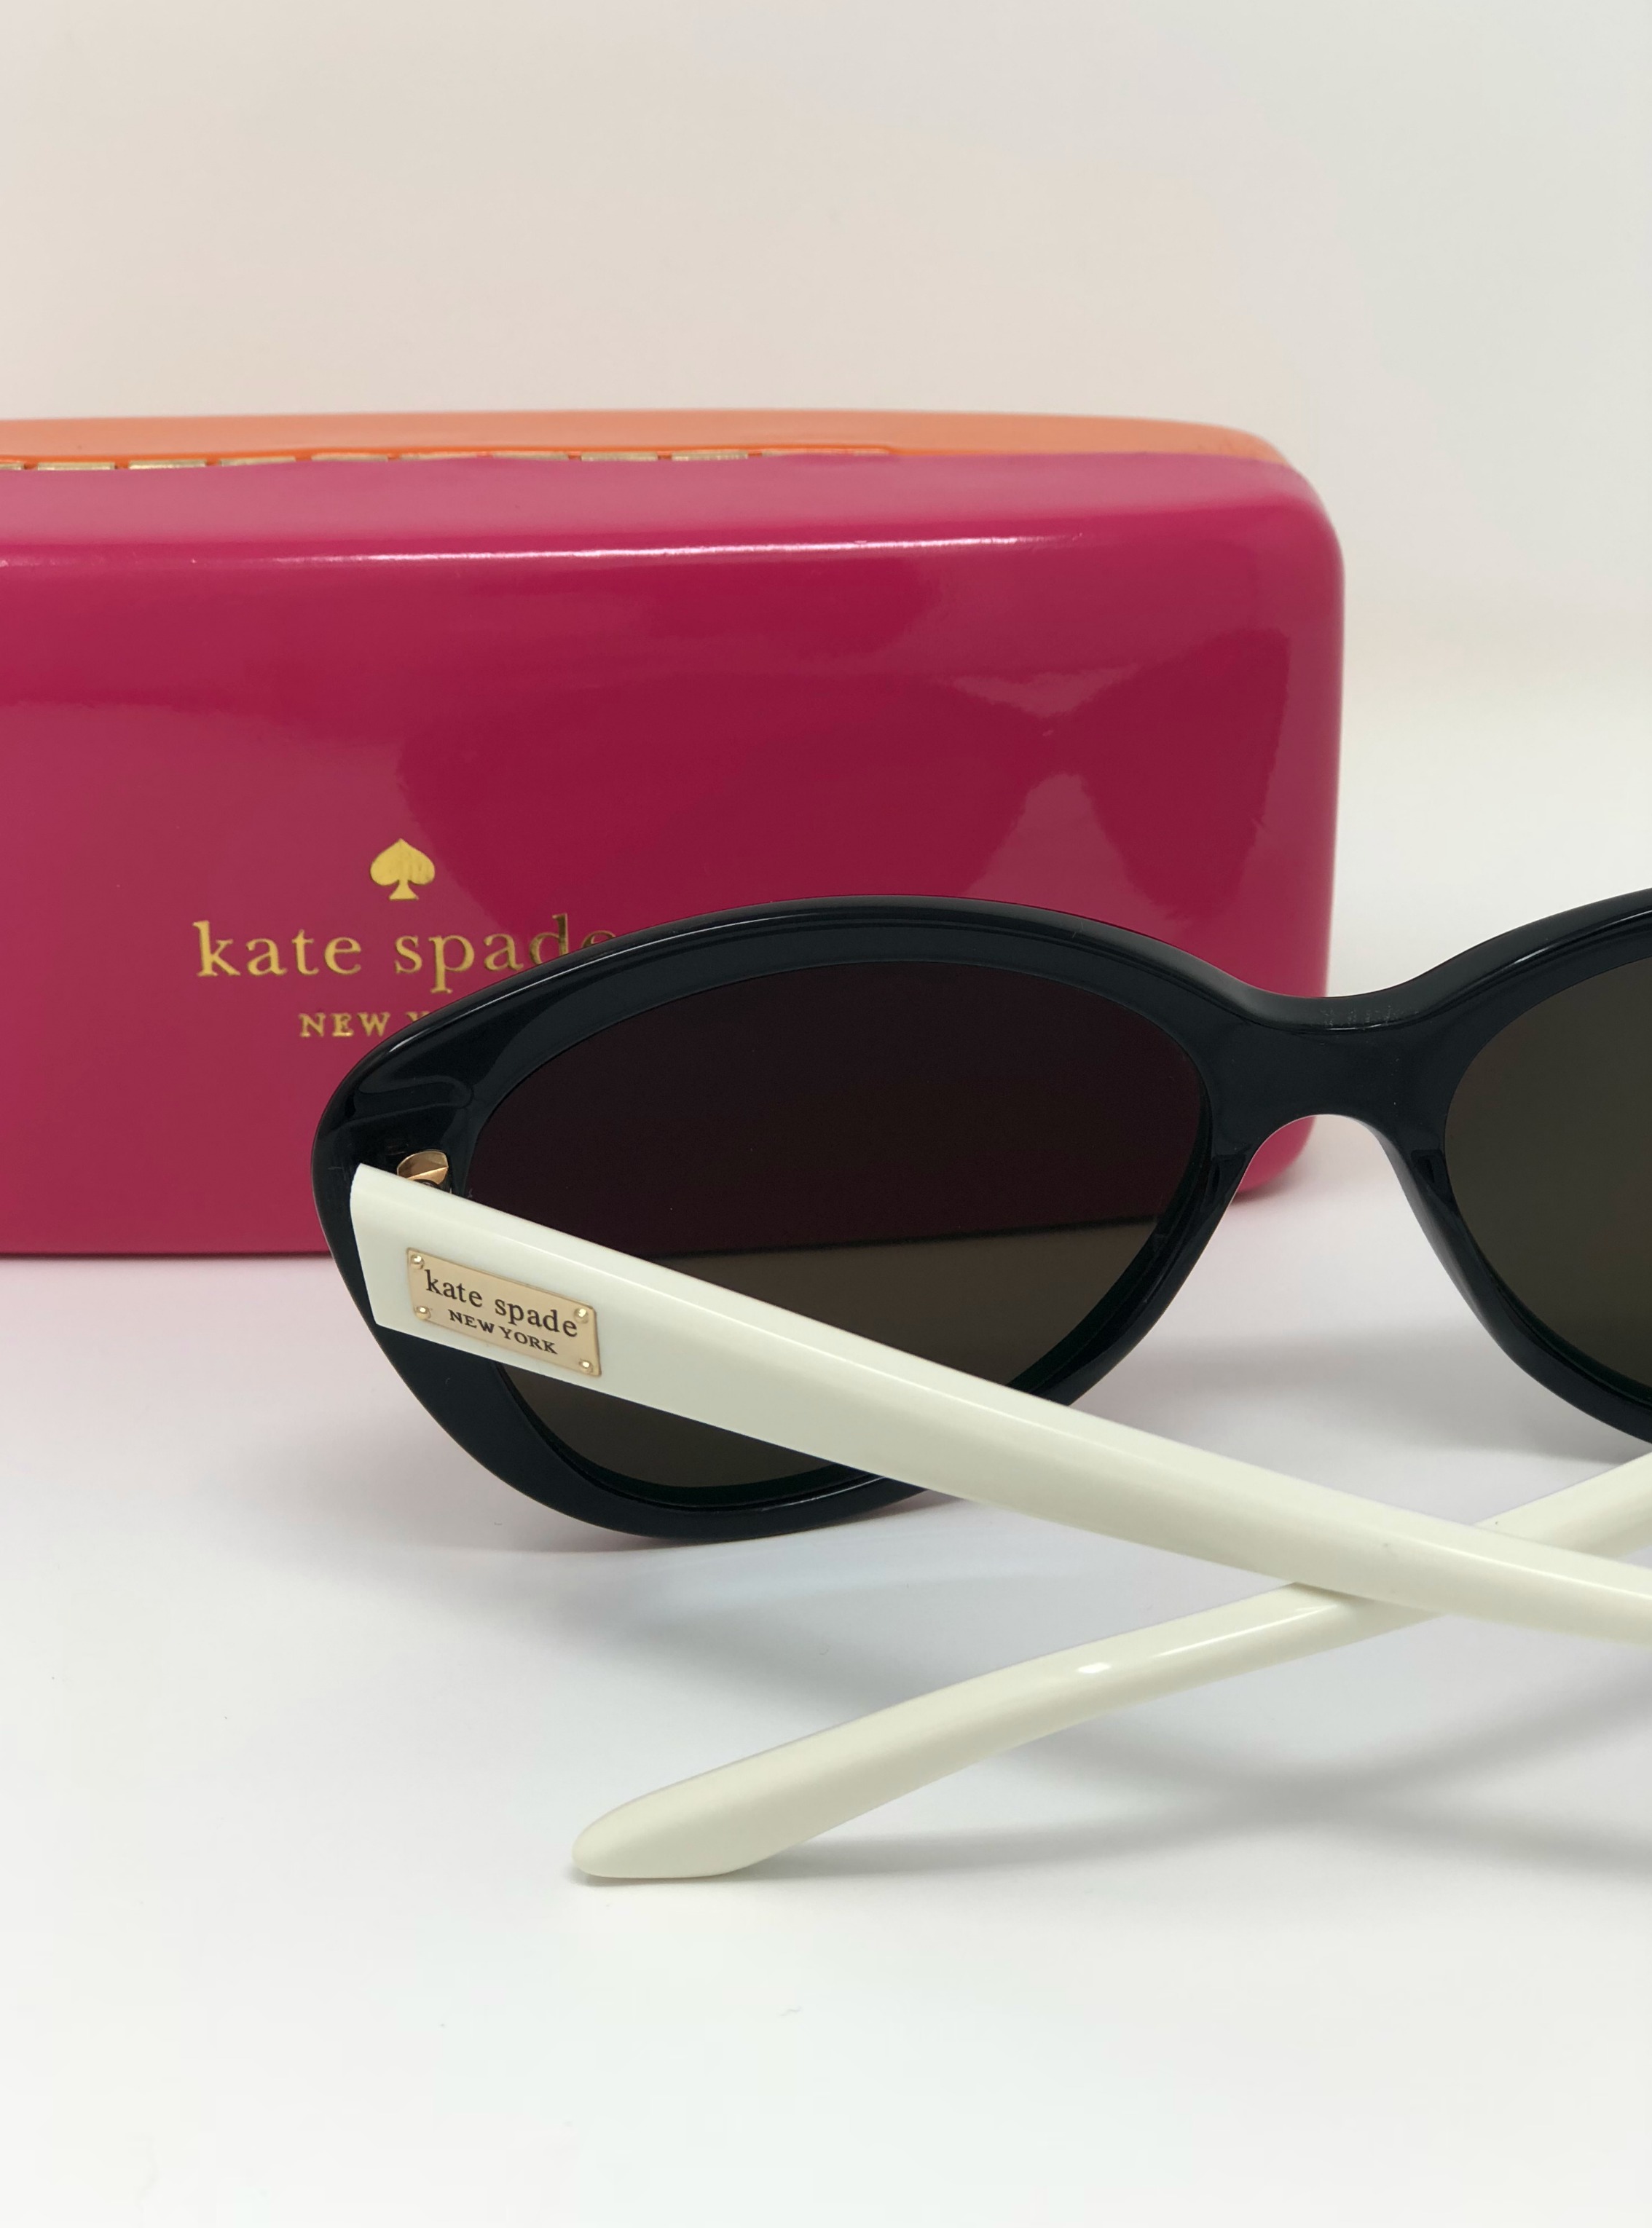 Kate Spade black and white sunglasses